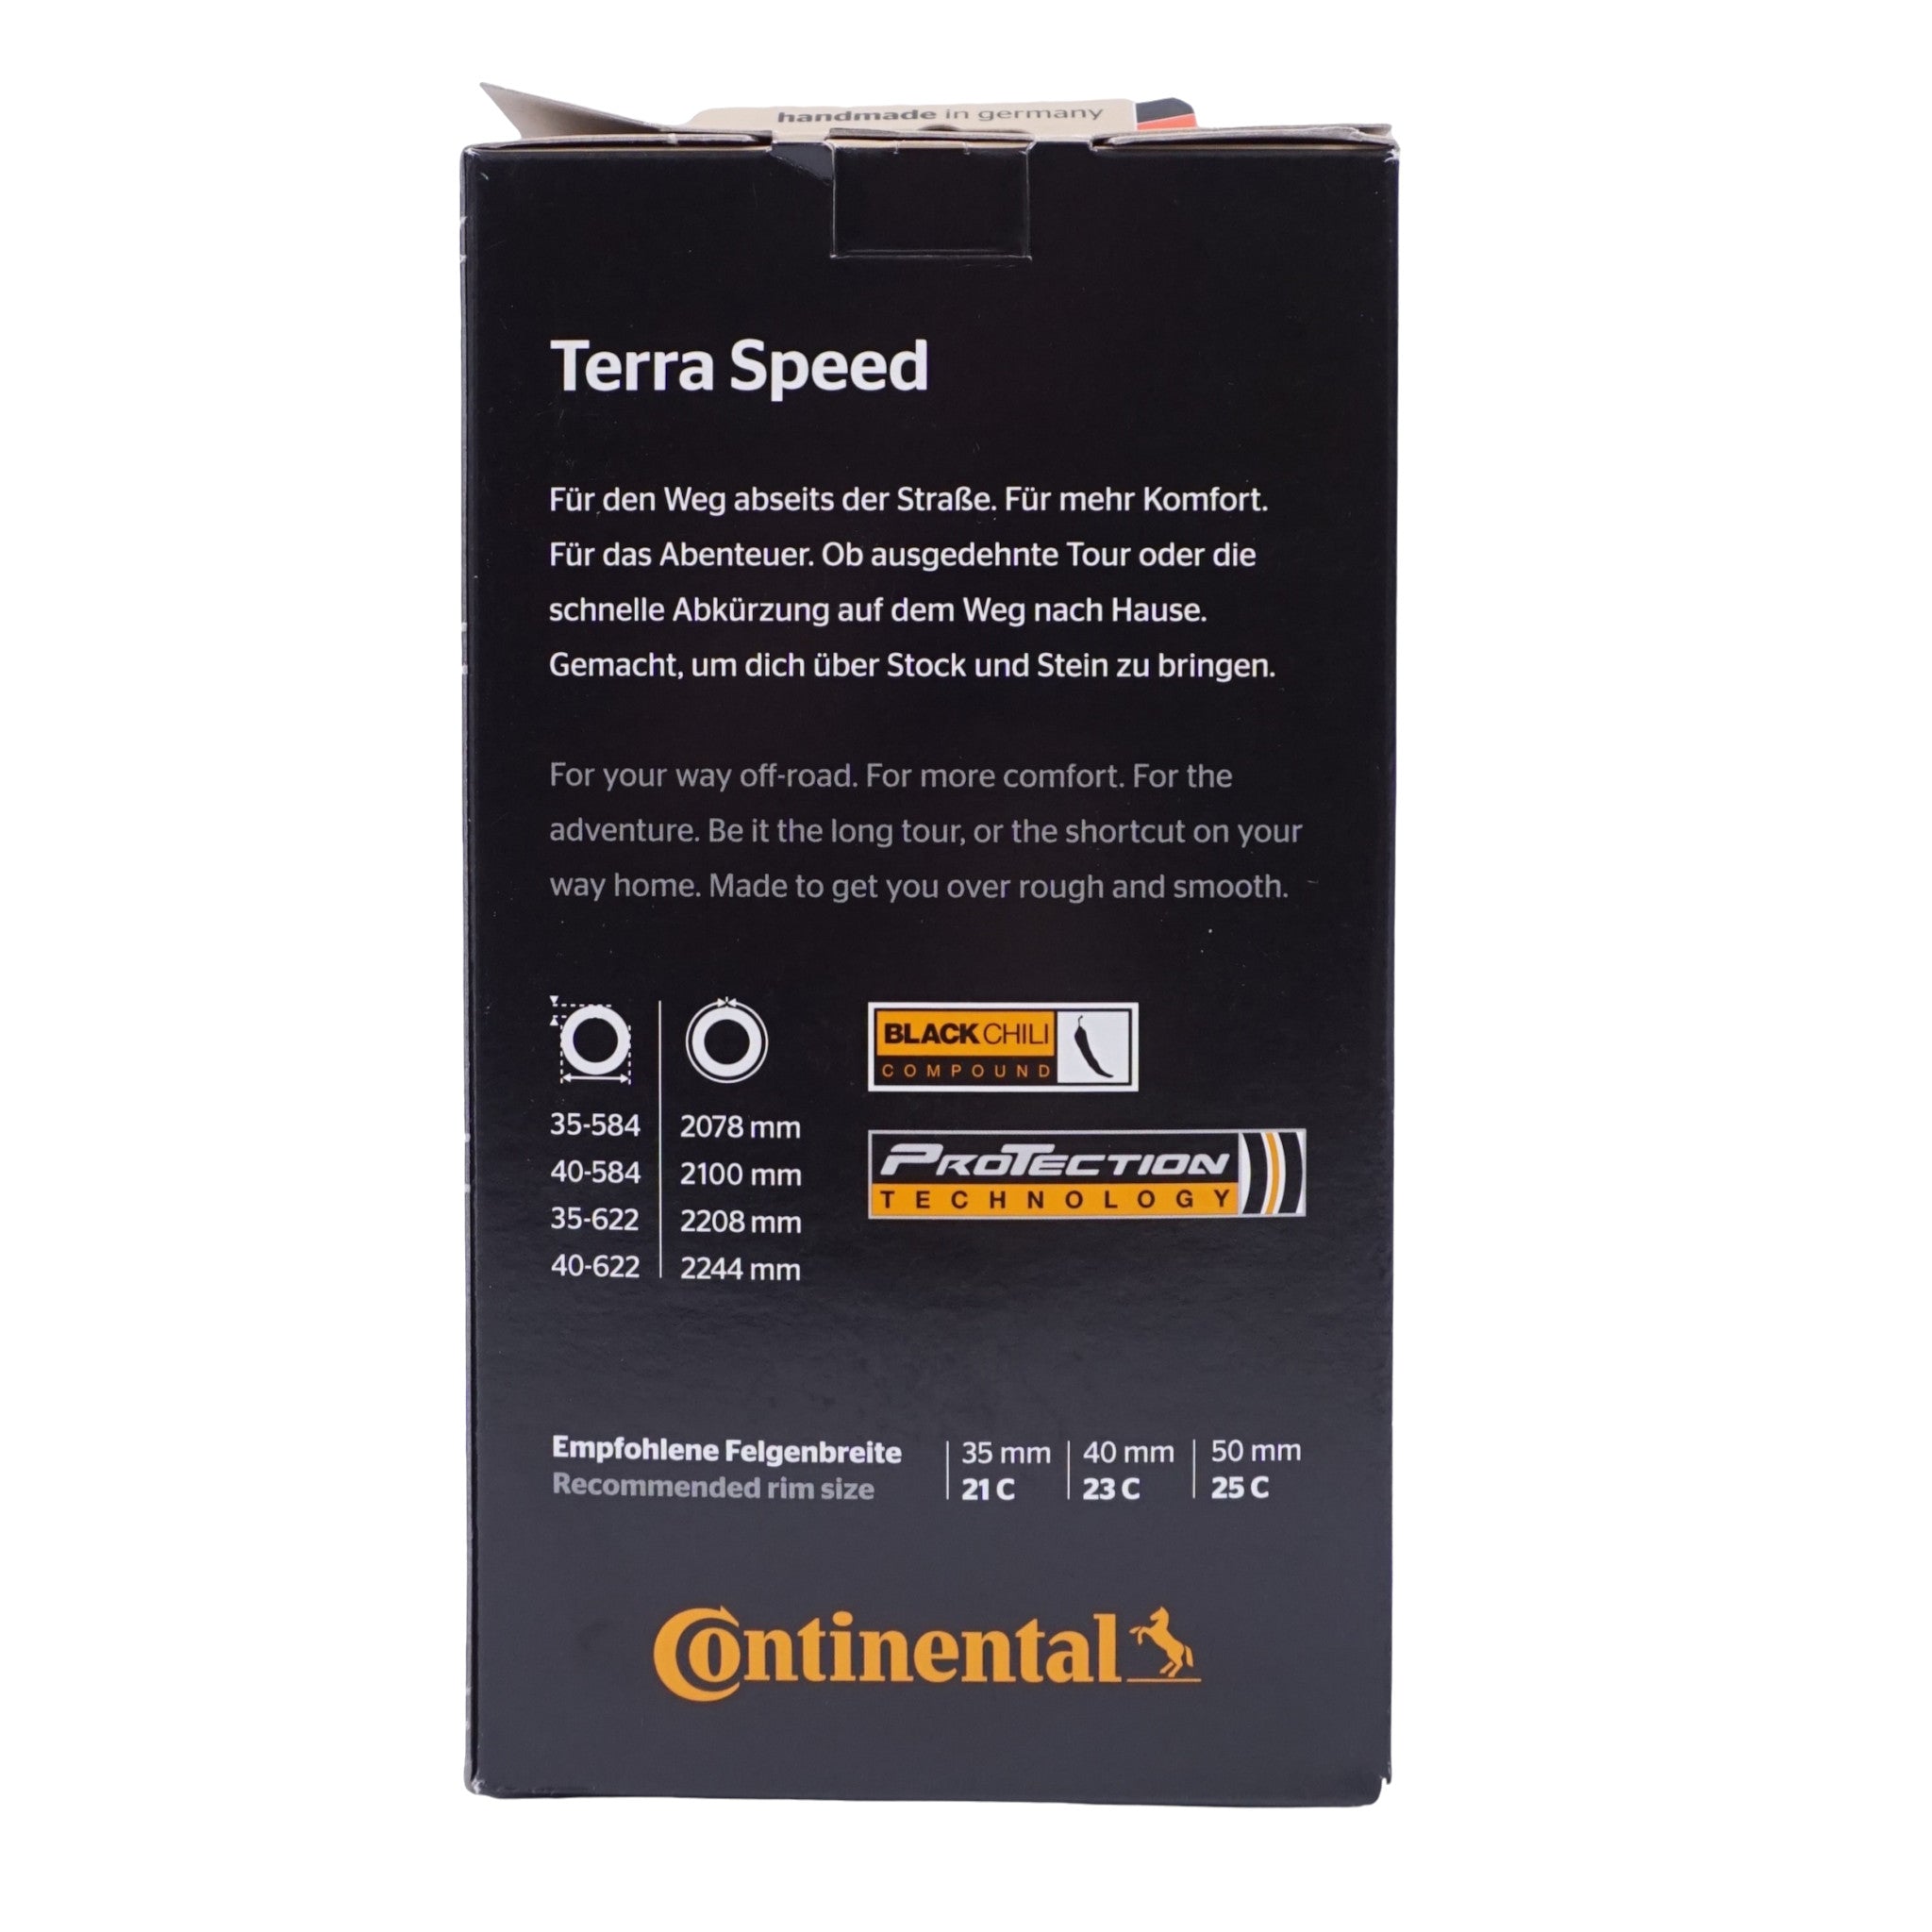 Continental Terra Speed 700c Tubeless BlackChili ProTection Black/Tan Tire